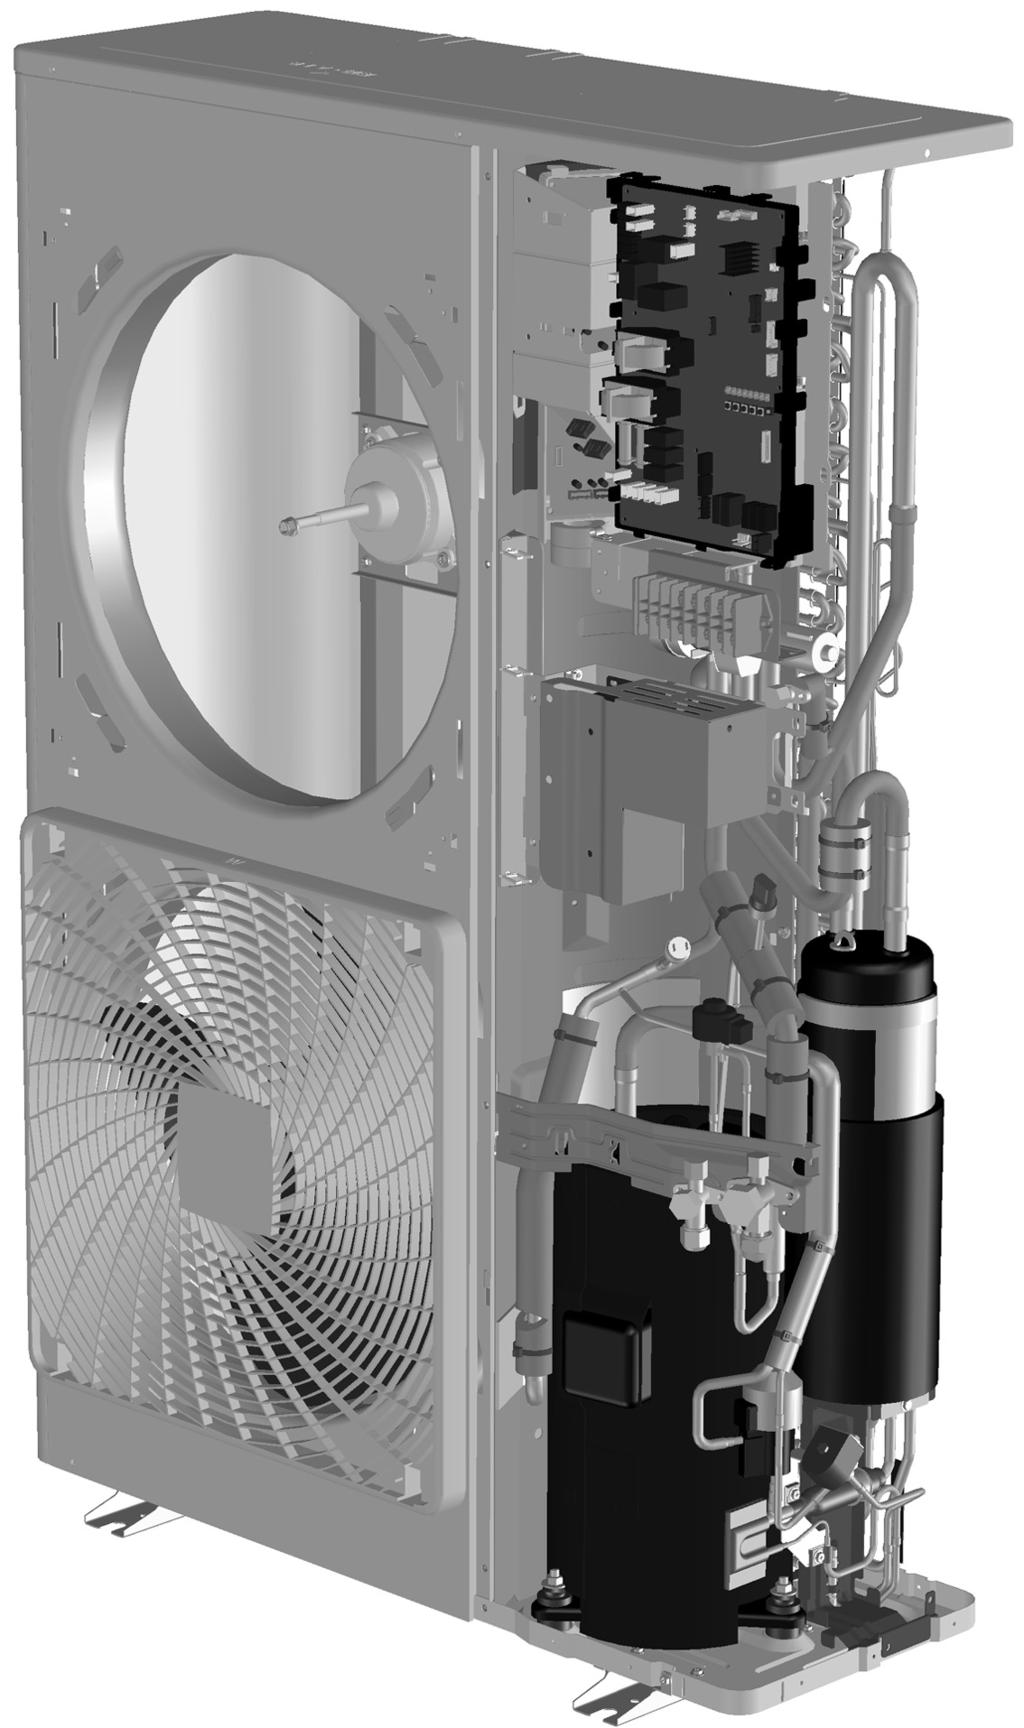 W 9 0 8 7 0 8 Izmjenjivač topline Motor ventilatora Zavojnice reaktora -smjerni ventil 5 Tiskana pločica filtra šuma (samo za modele V) 6 Servisna tiskana pločica (samo za modele V) 7 Senzor pritiska